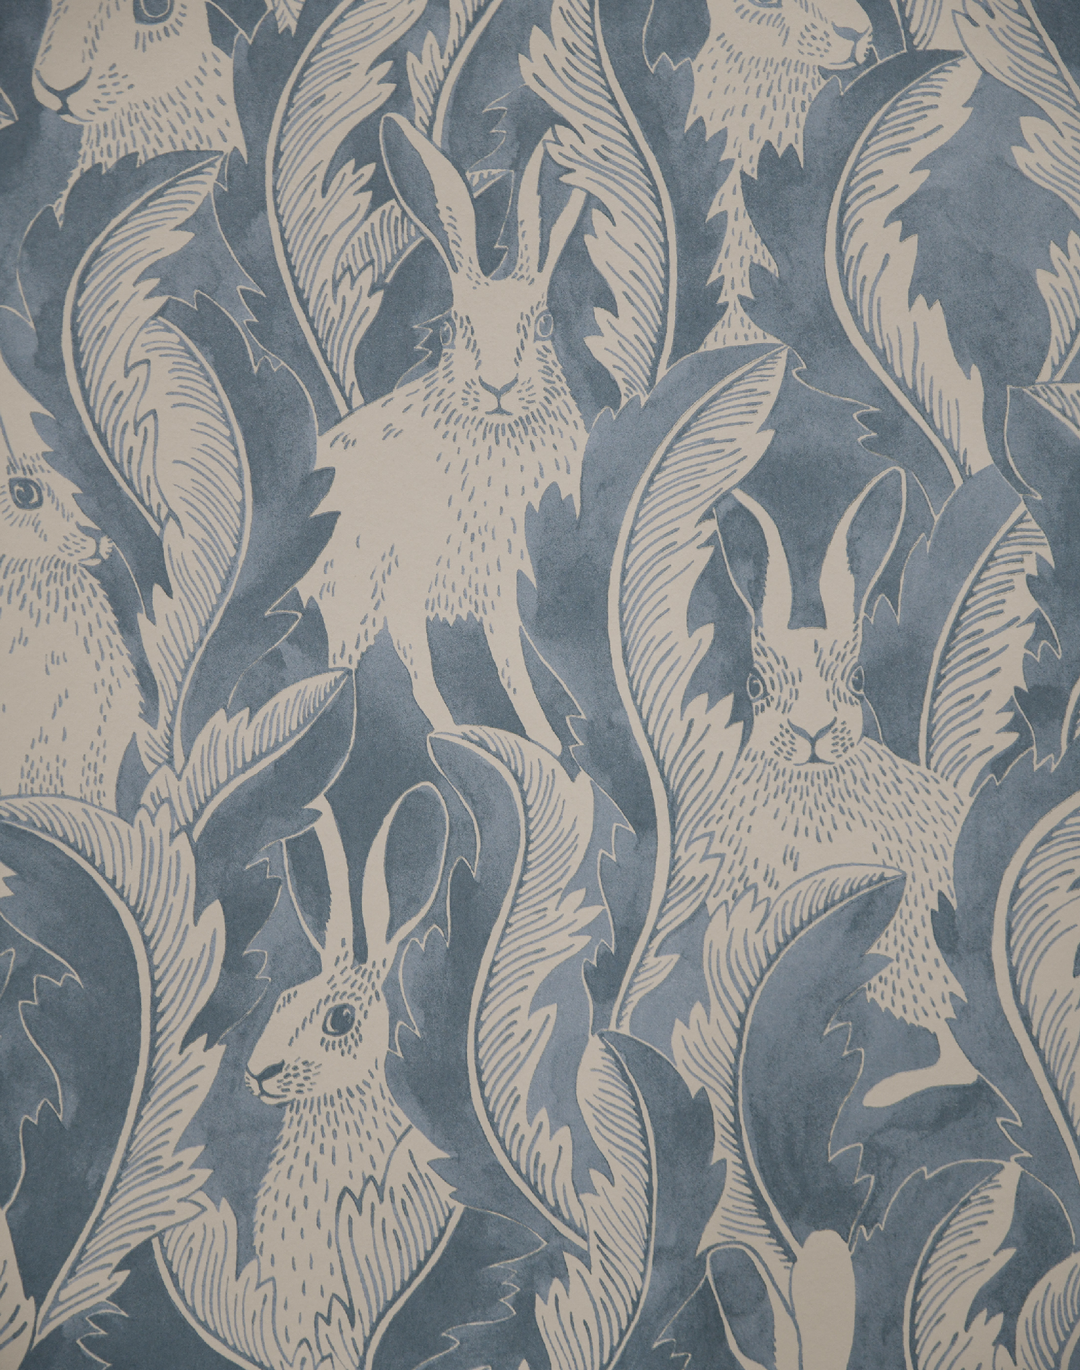 Hares in Hiding, Smokey Blue